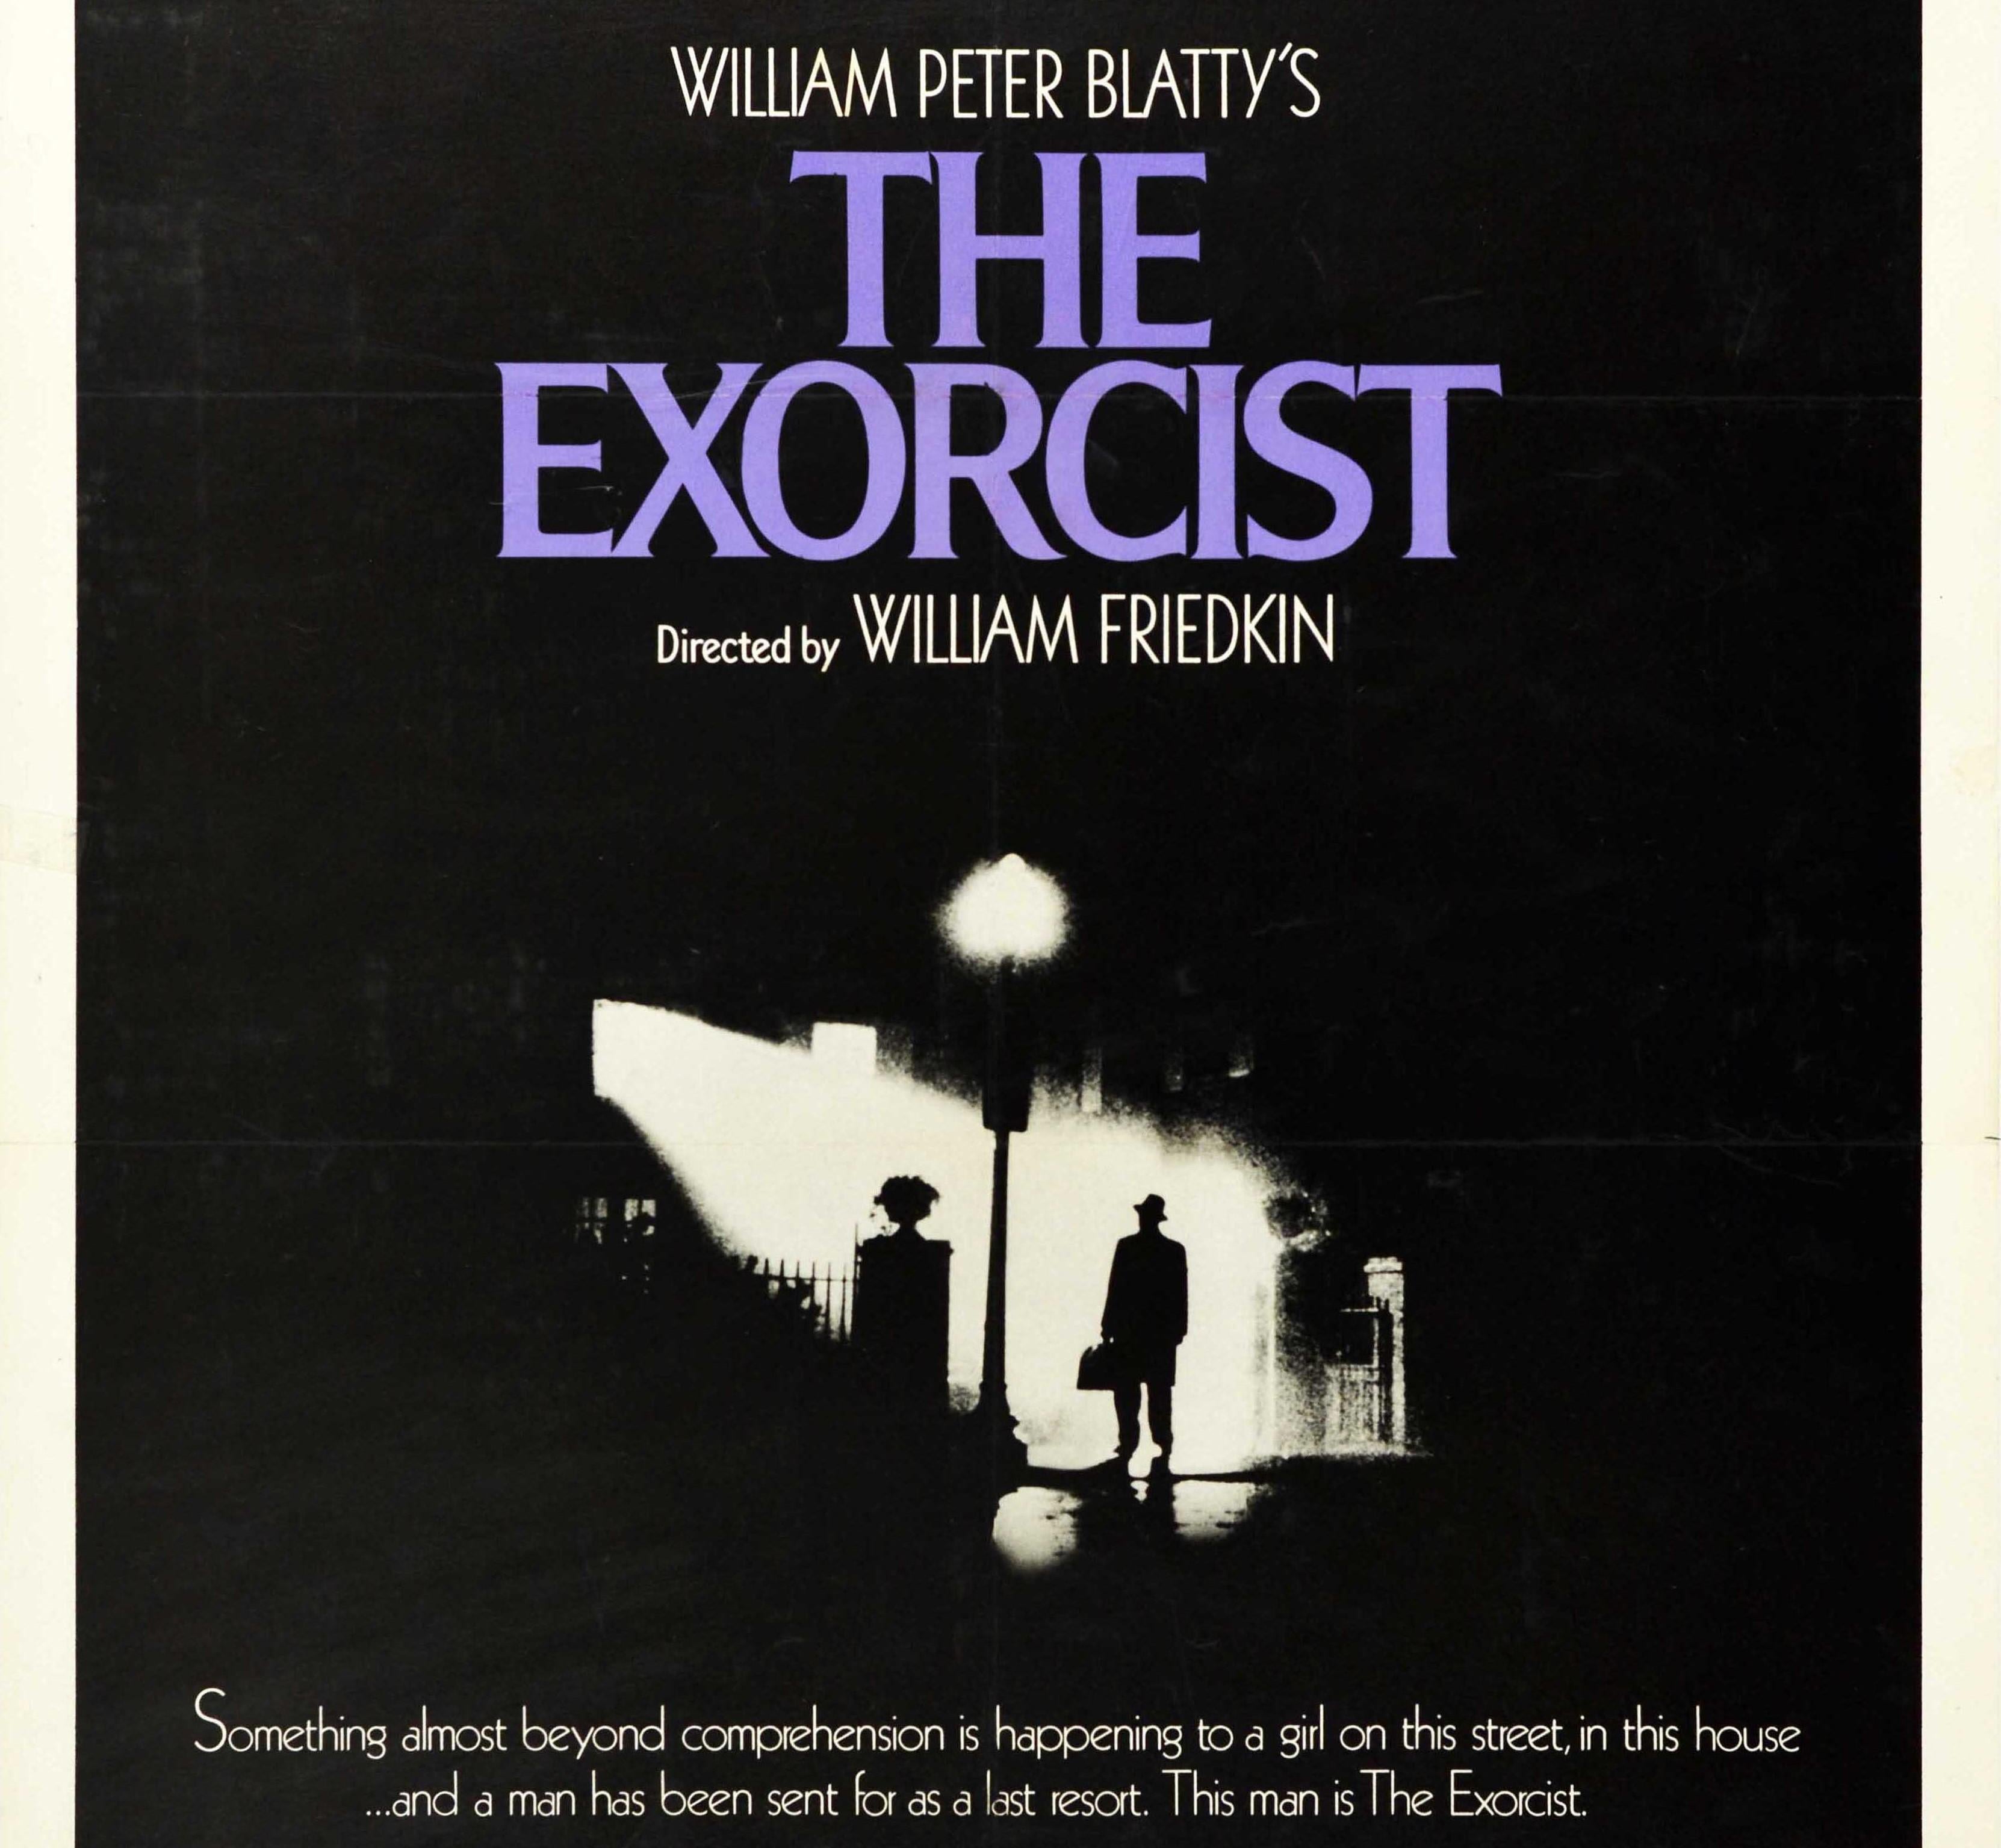 the exorcist original movie poster